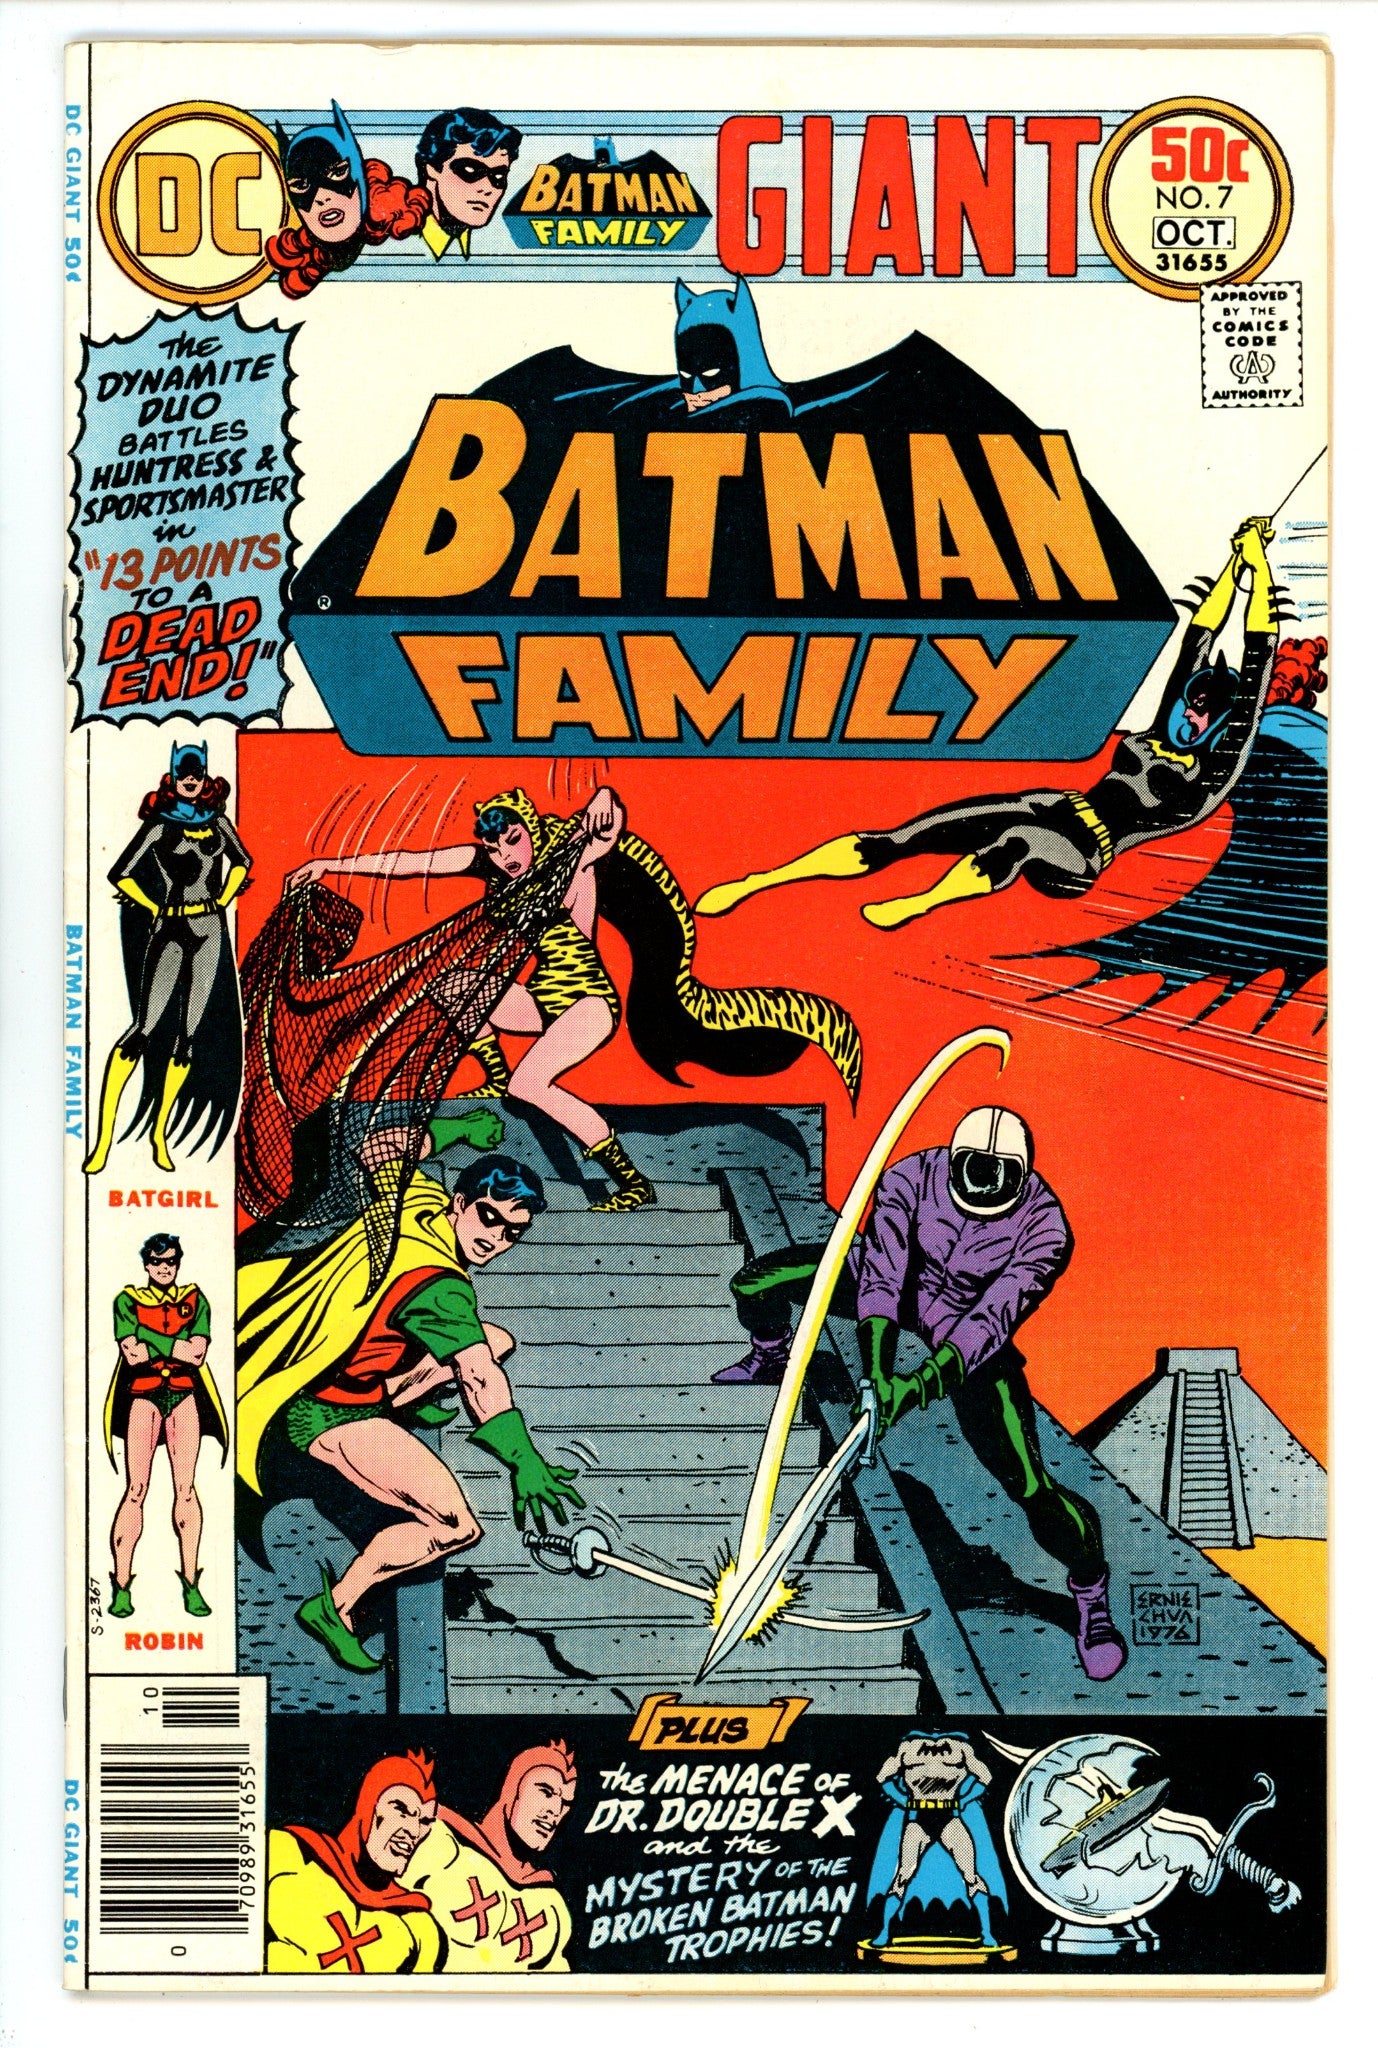 The Batman Family Vol 1 7 FN+ (6.5) (1976) 